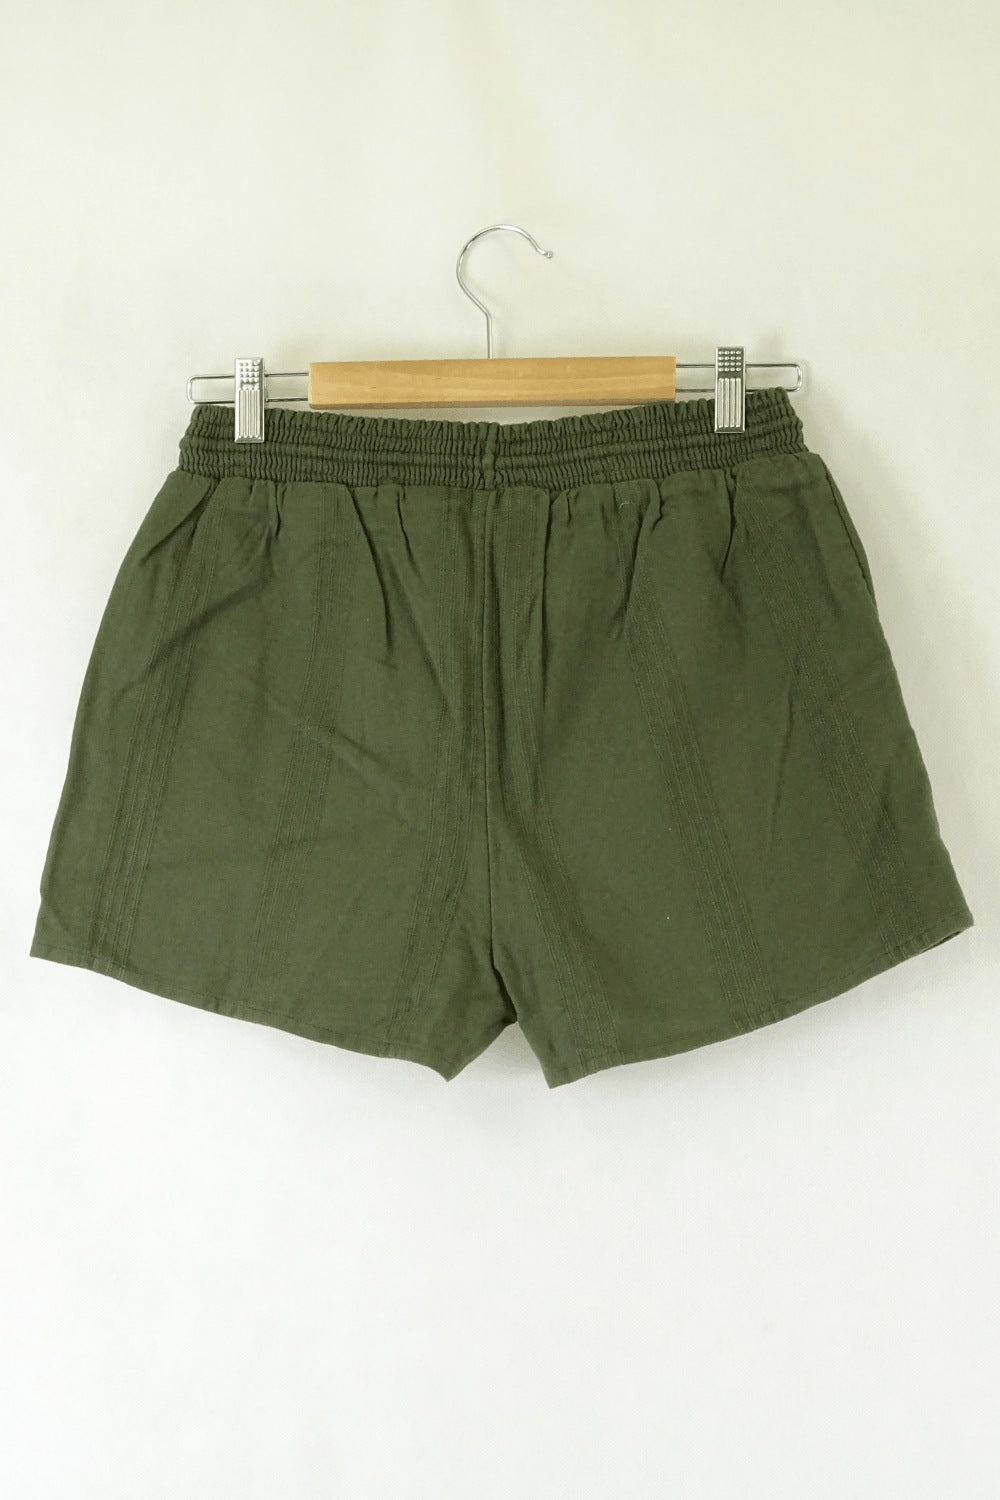 Ripcurl Green Shorts S